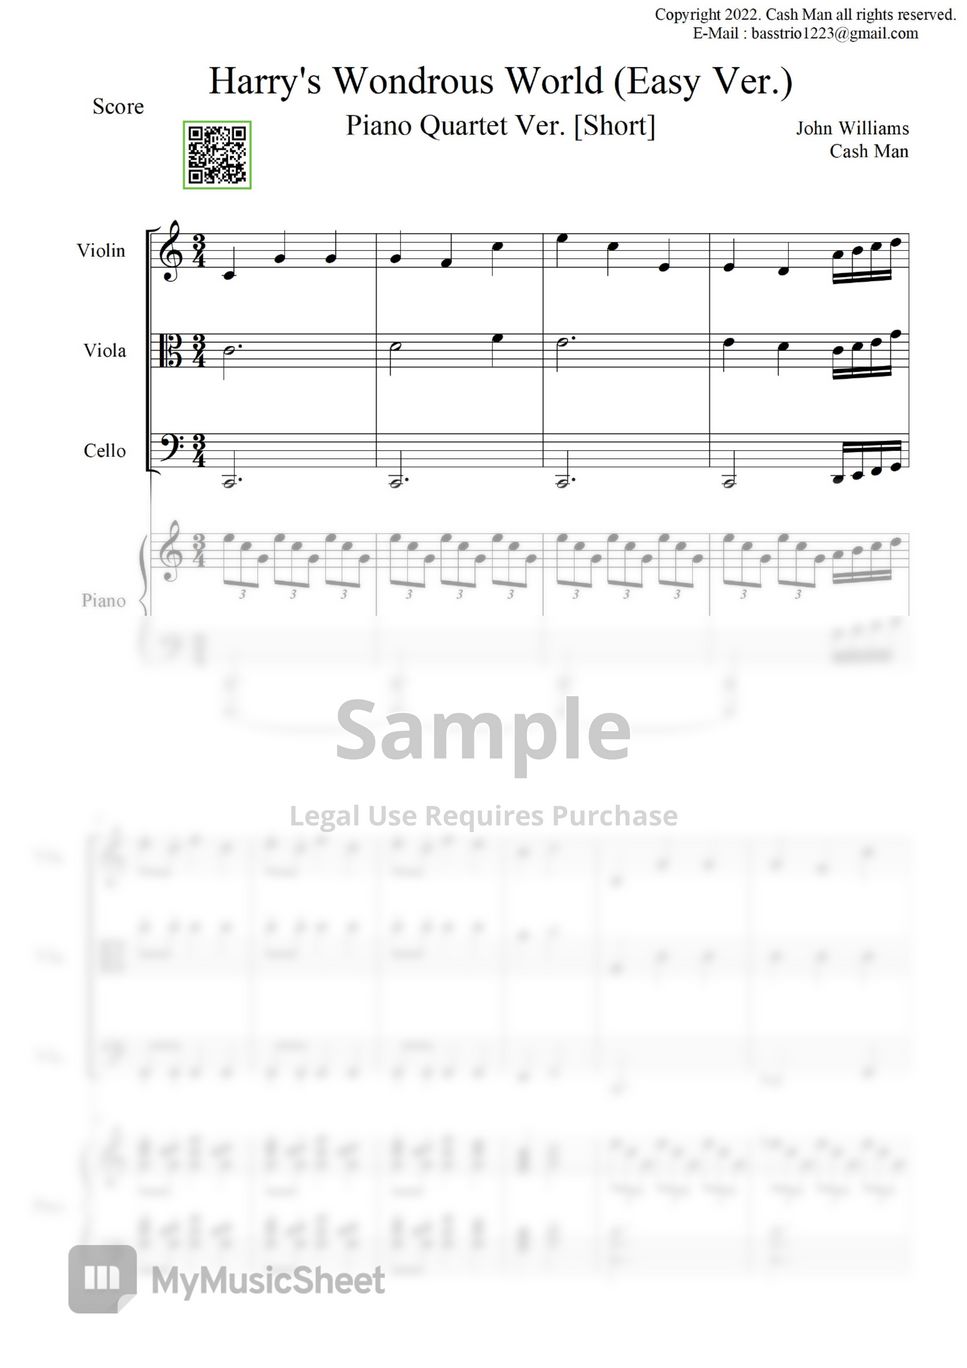 John Williams - Harry's Wondrous World (Piano Quartet / Full Score / Part Score / Arrangement / Backing Track) by Cash Man